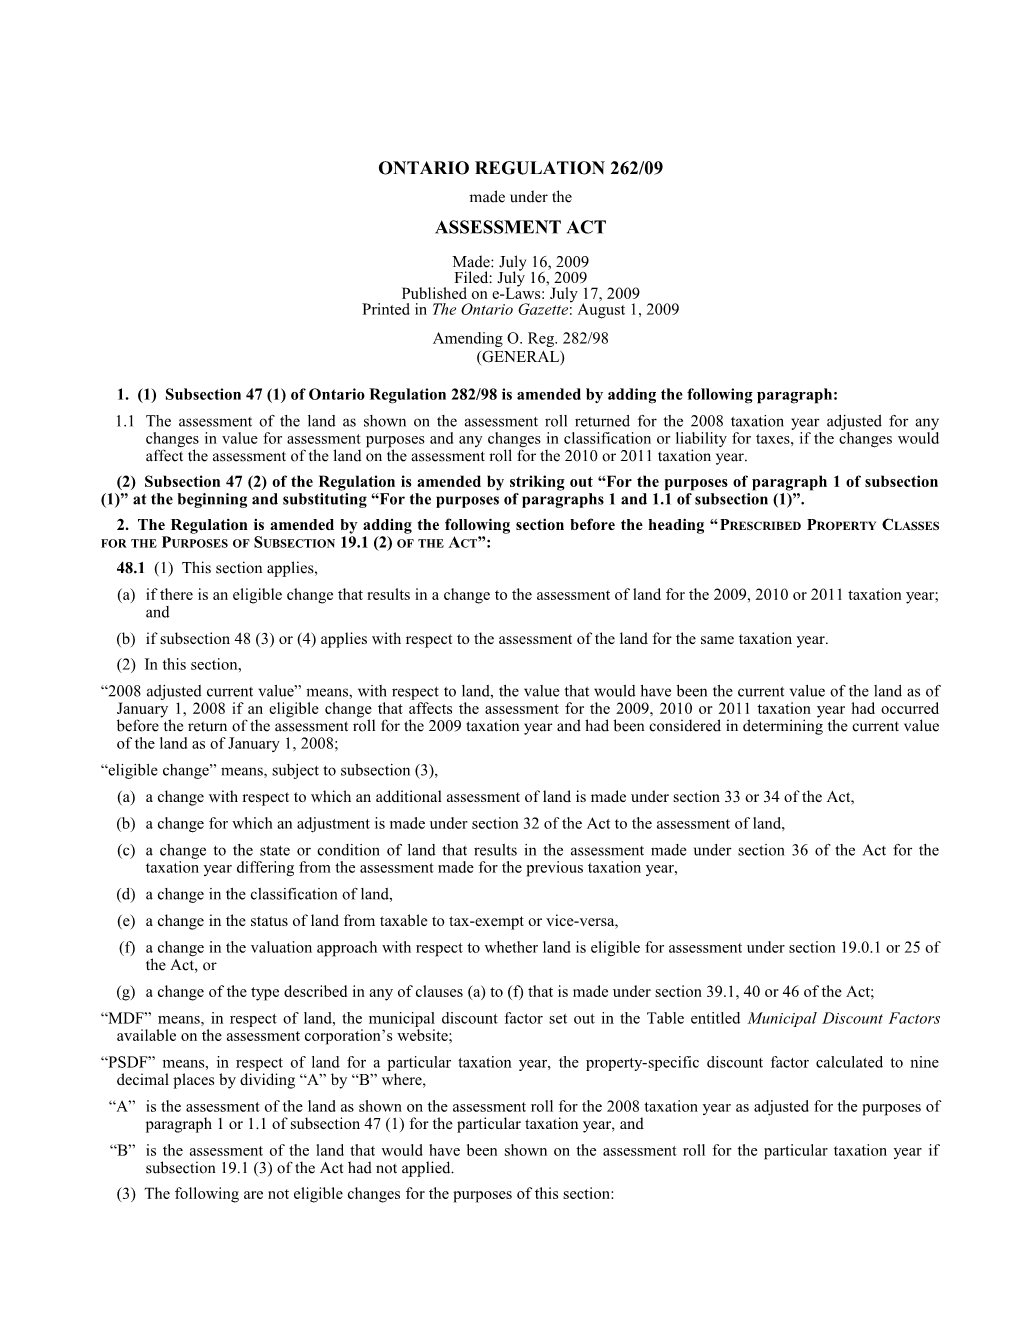 ASSESSMENT ACT - O. Reg. 262/09